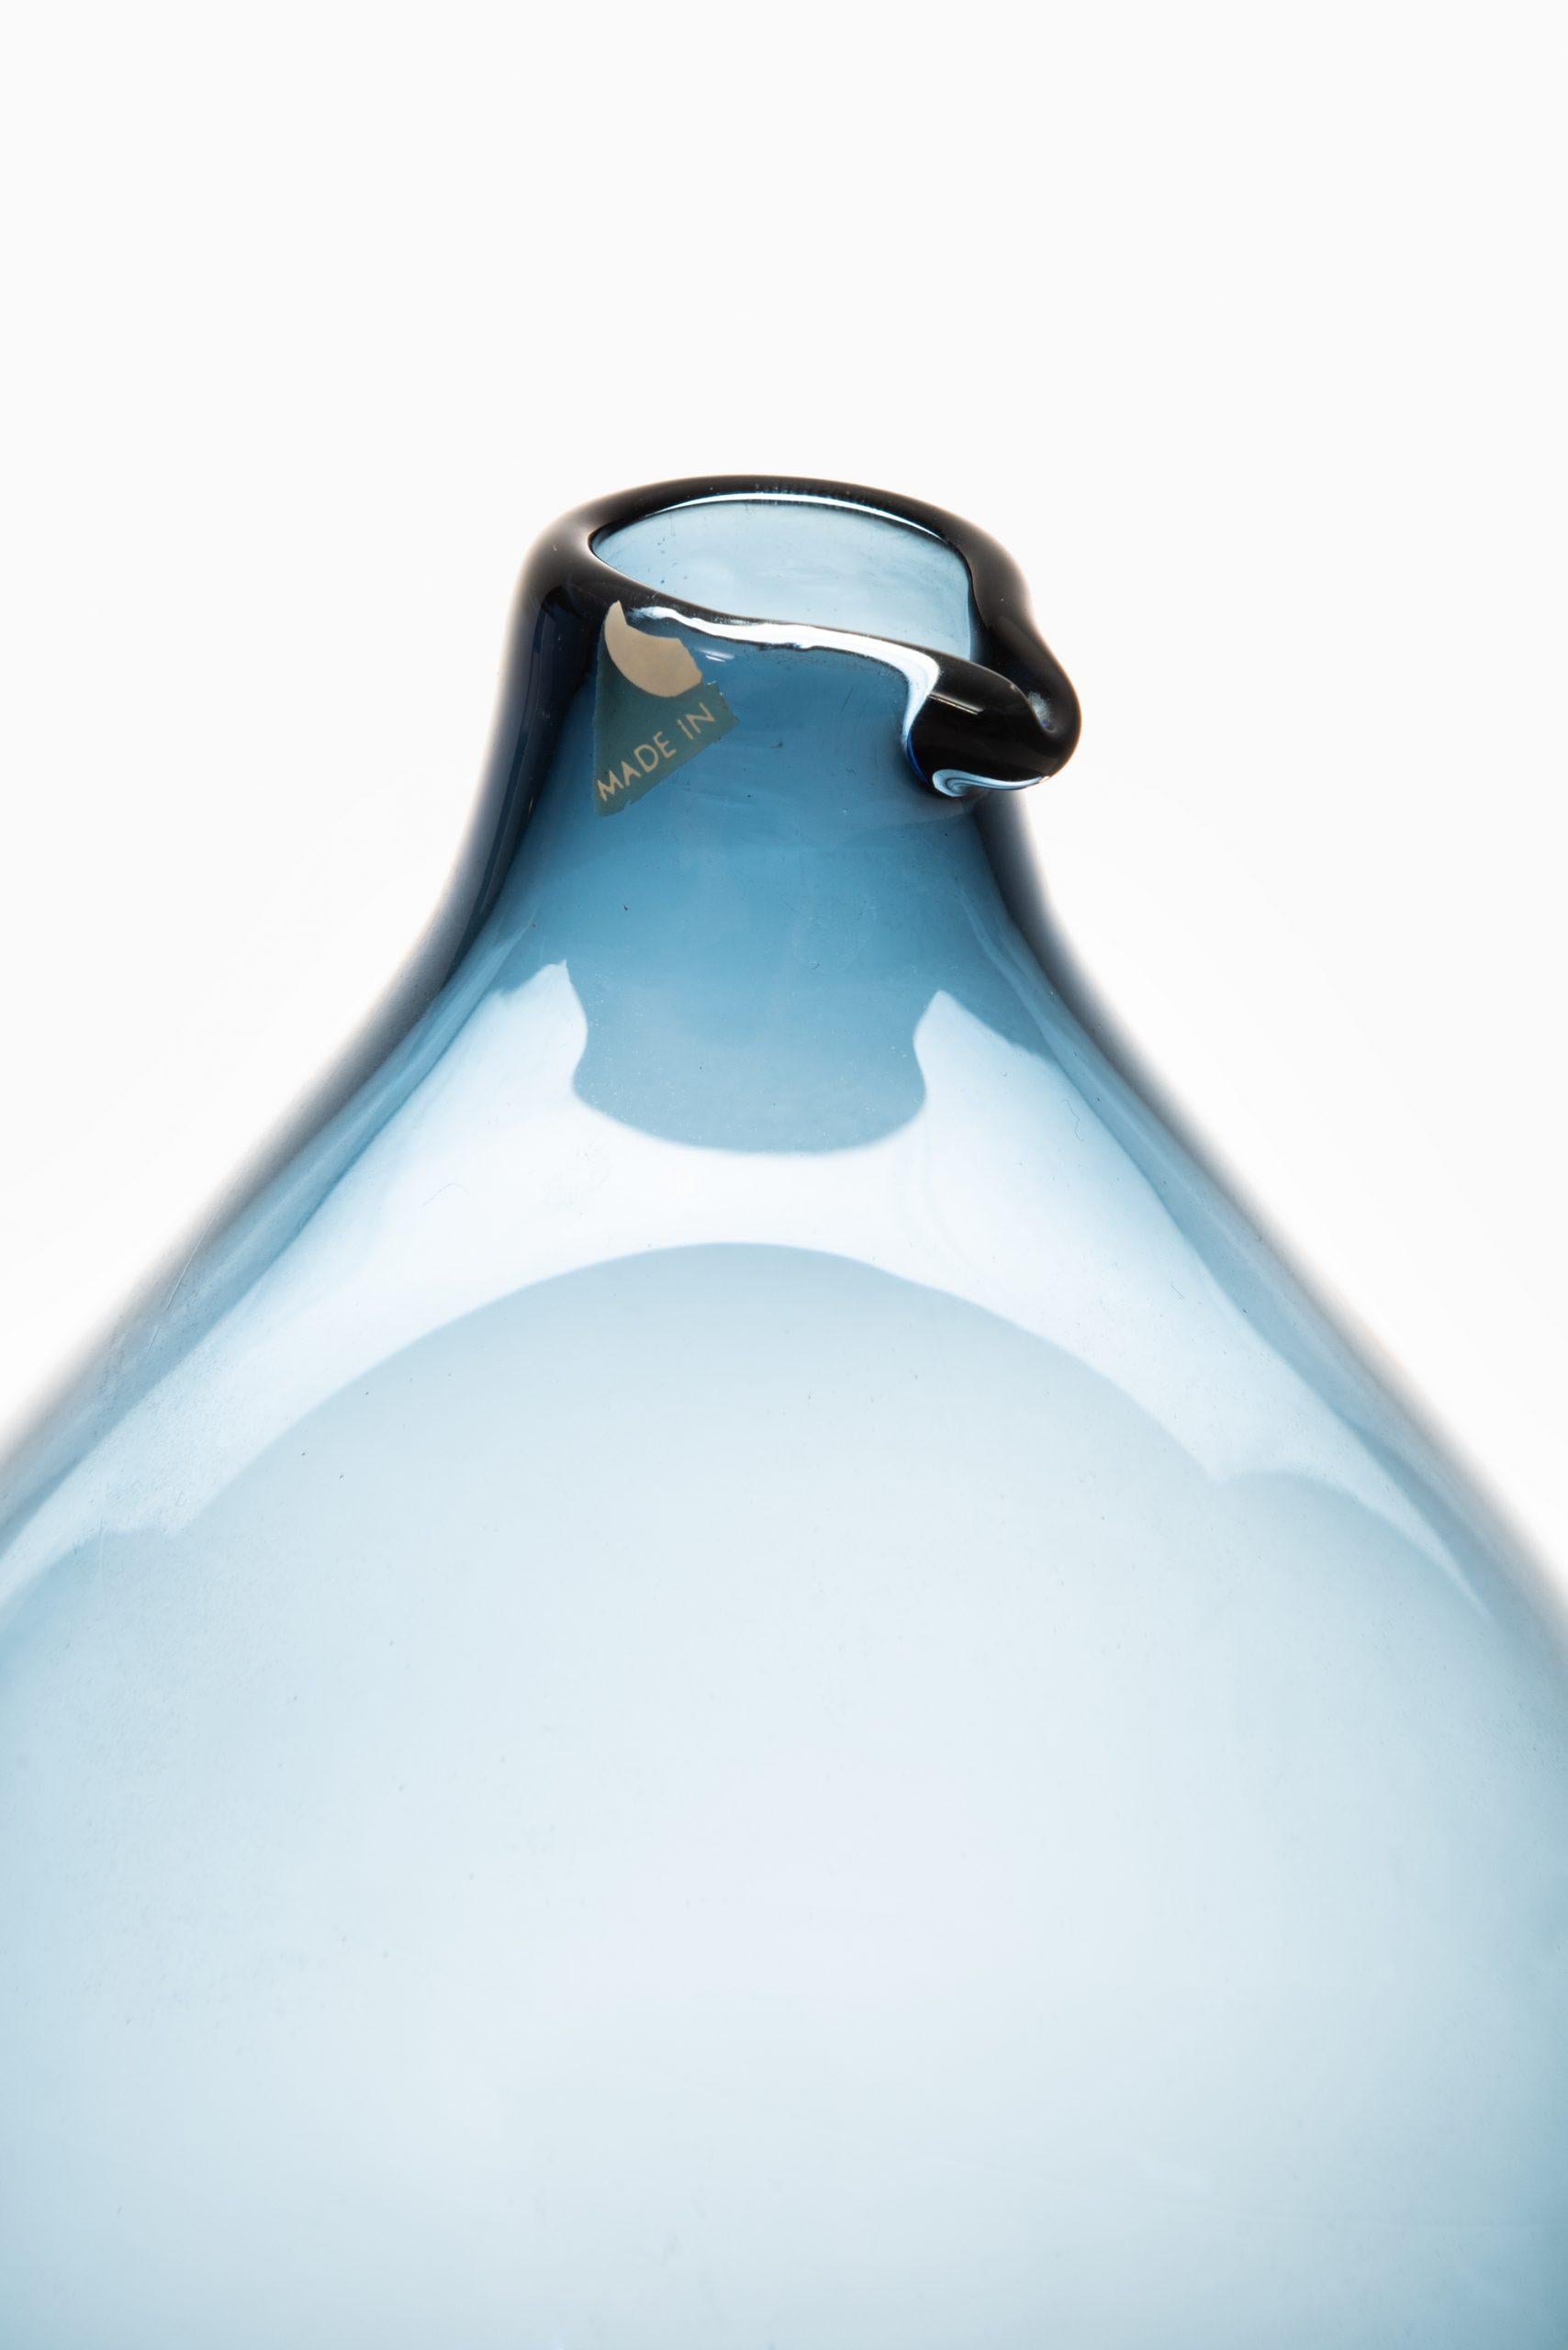 Glass bottle / vase model Pullo / Bird vase designed by Timo Sarpaneva. Produced by Iittala in Finland.